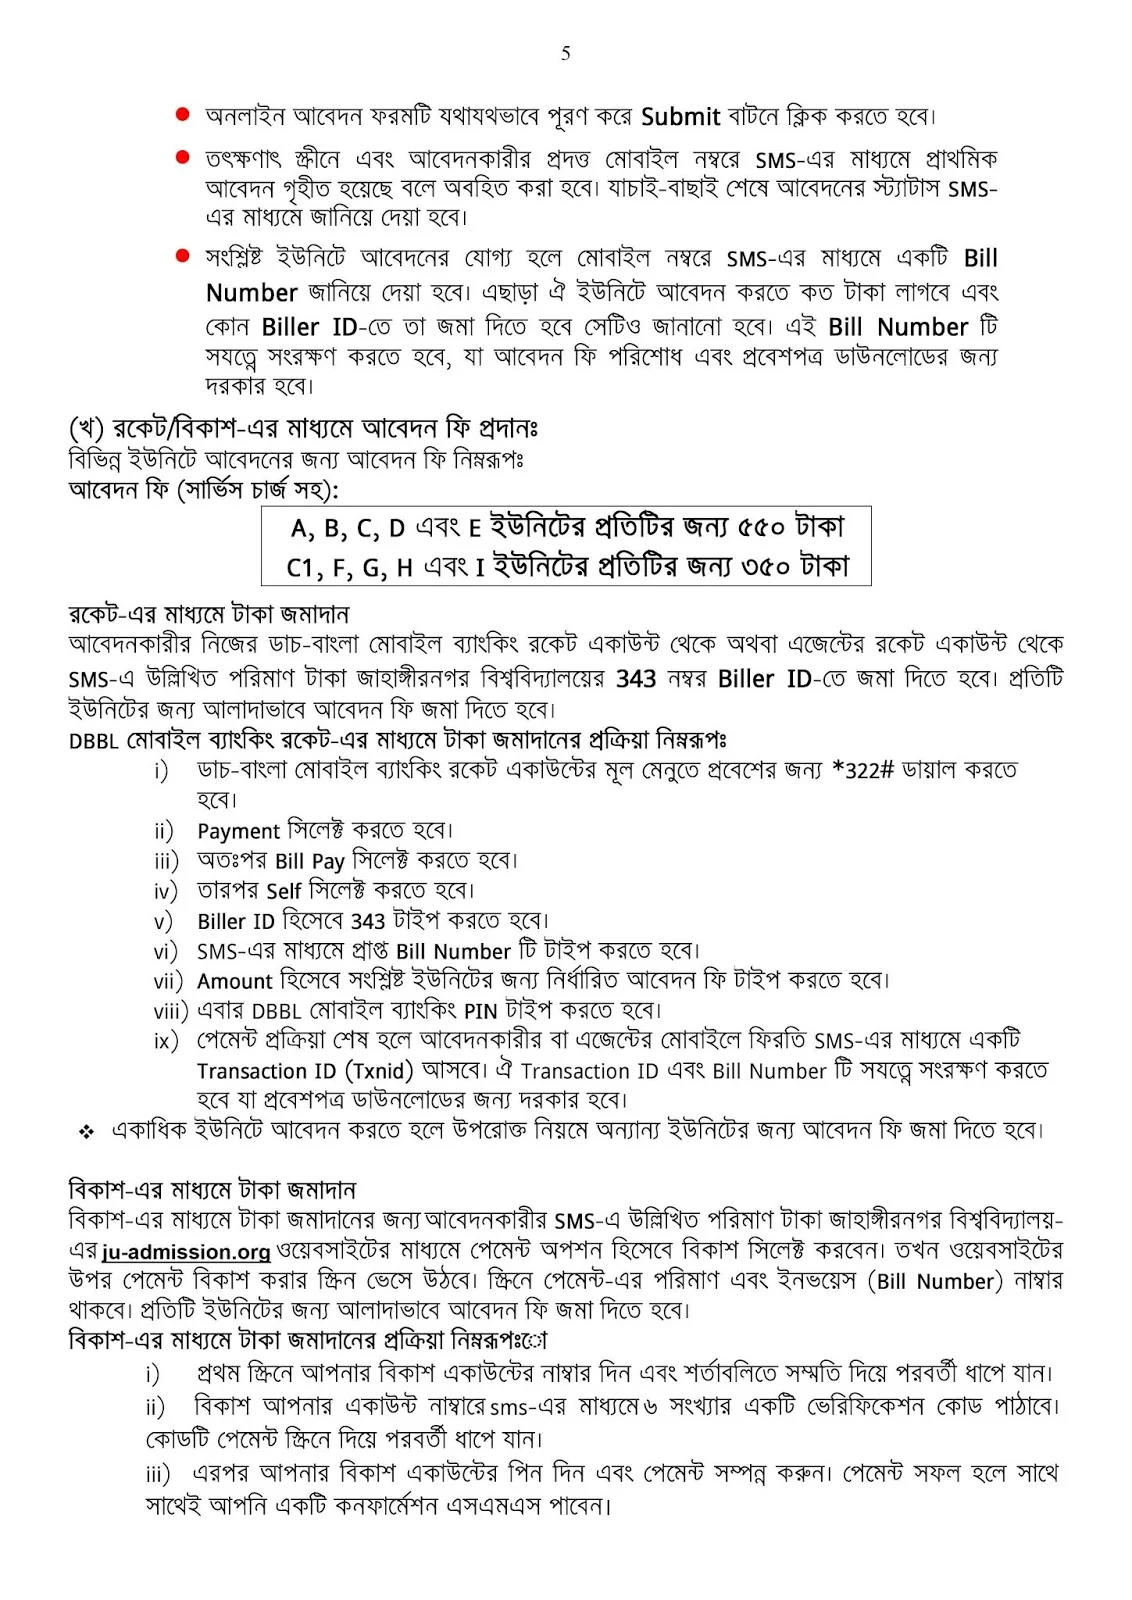 Jahangirnagar University (JU) Admission Test Circular 2018-2019 